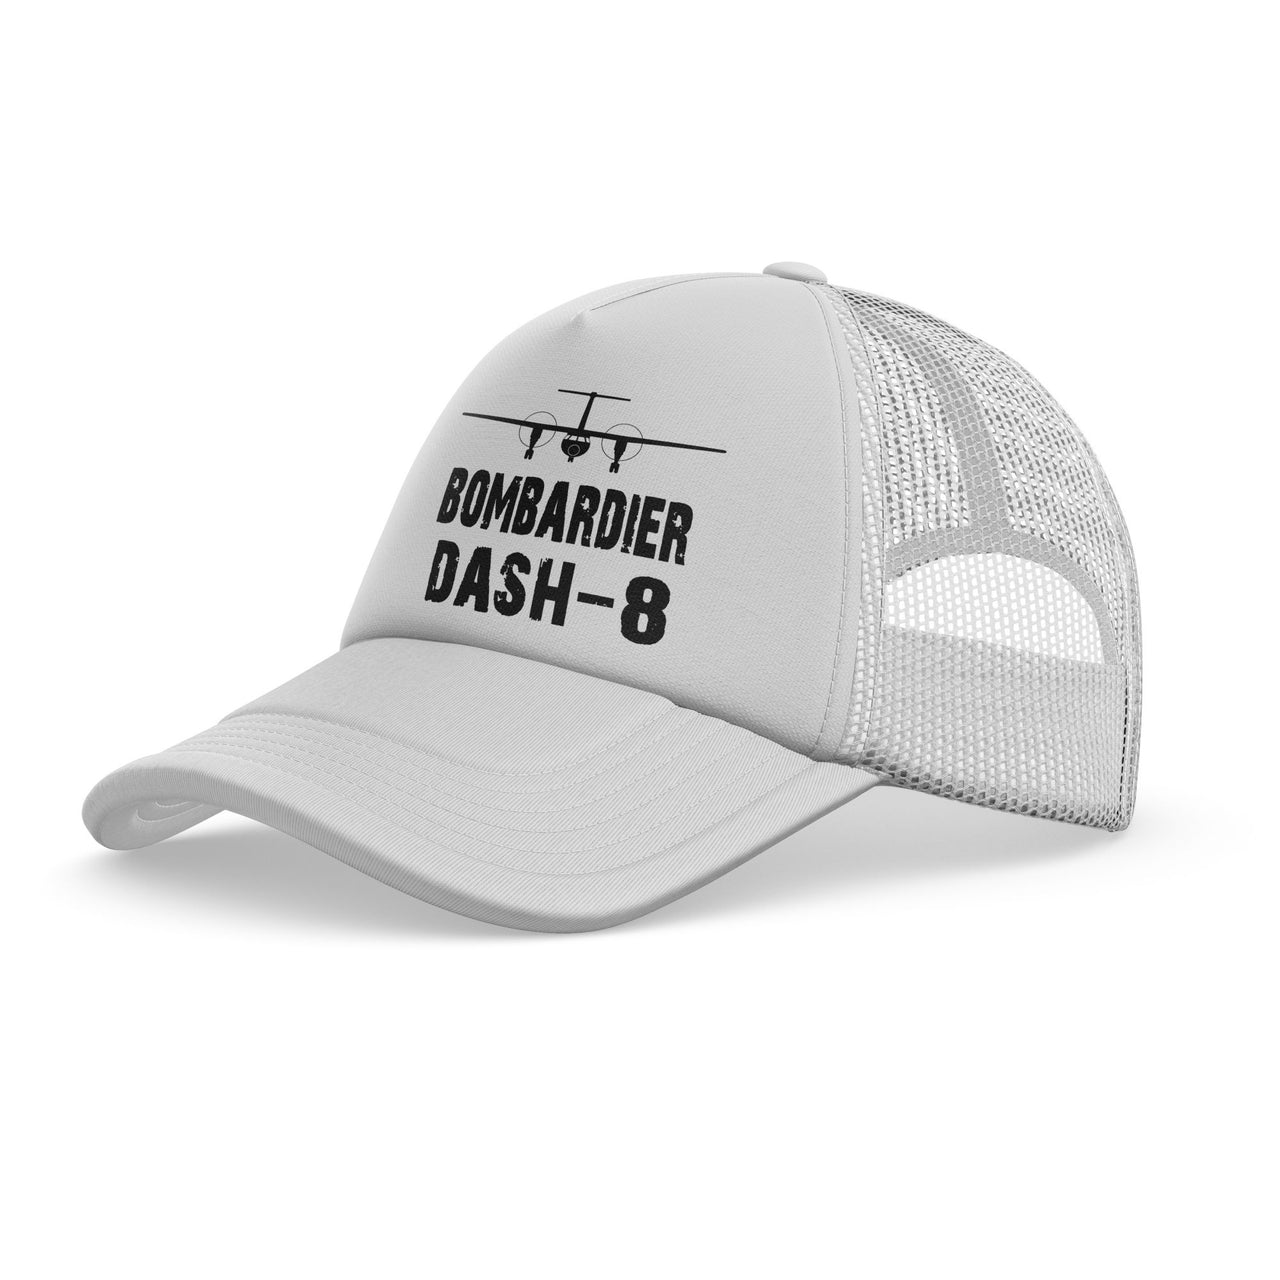 Bombardier Dash-8 & Plane Designed Trucker Caps & Hats